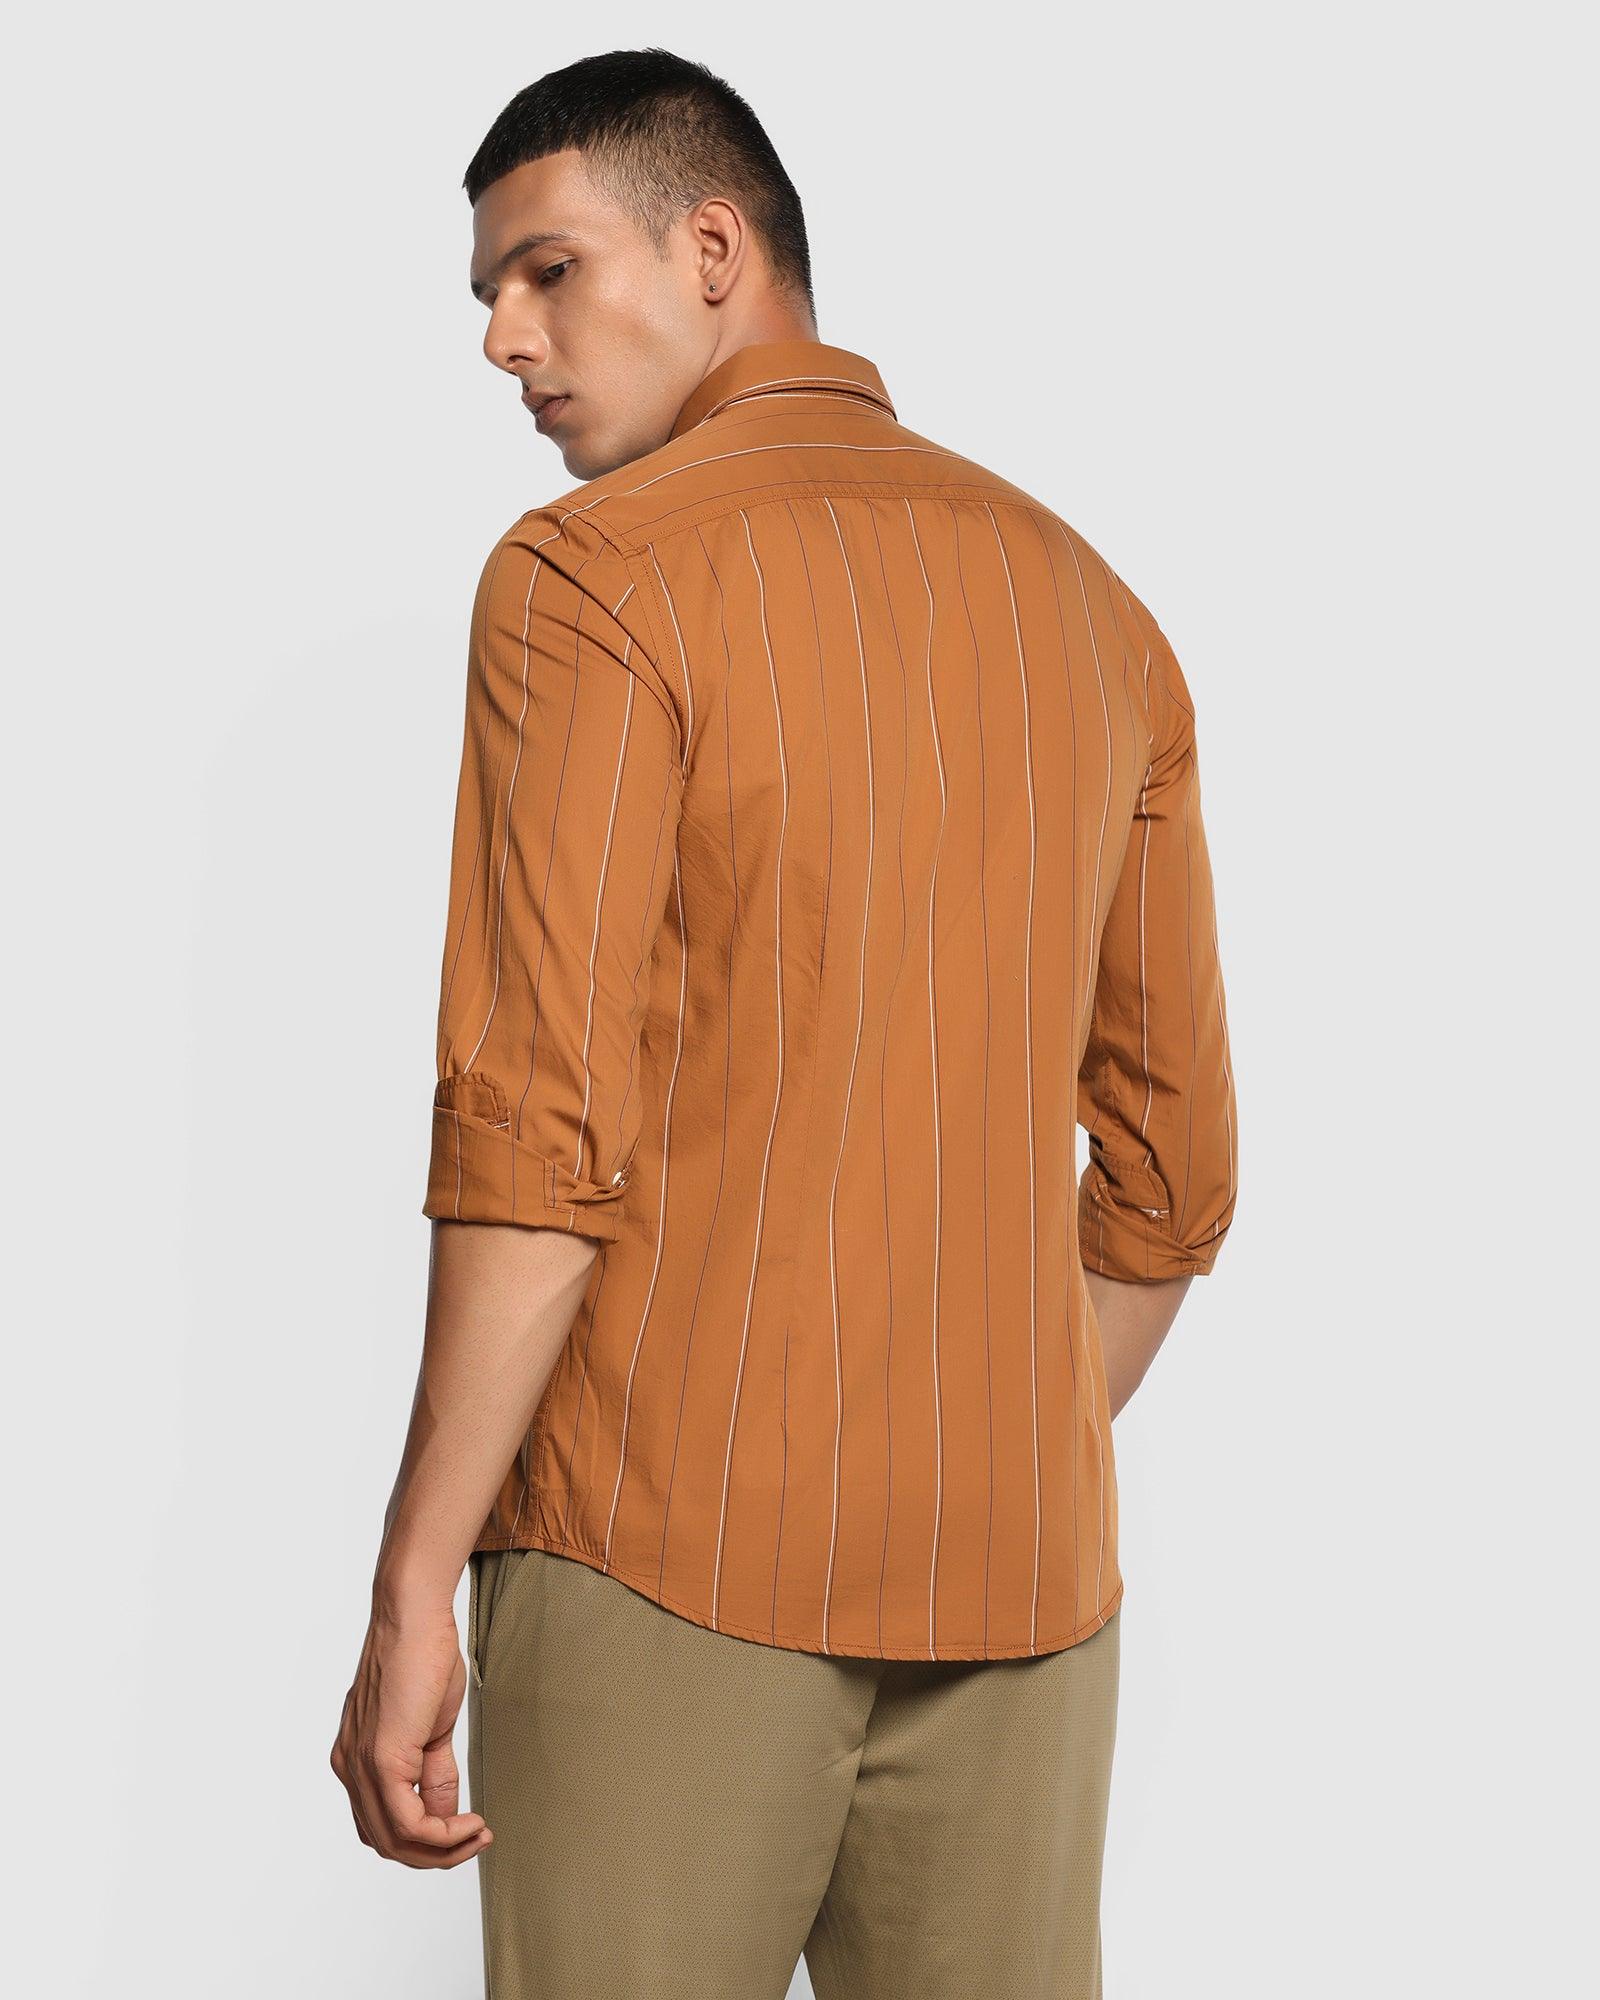 Casual Tobacco Brown Striped Shirt - Mystic